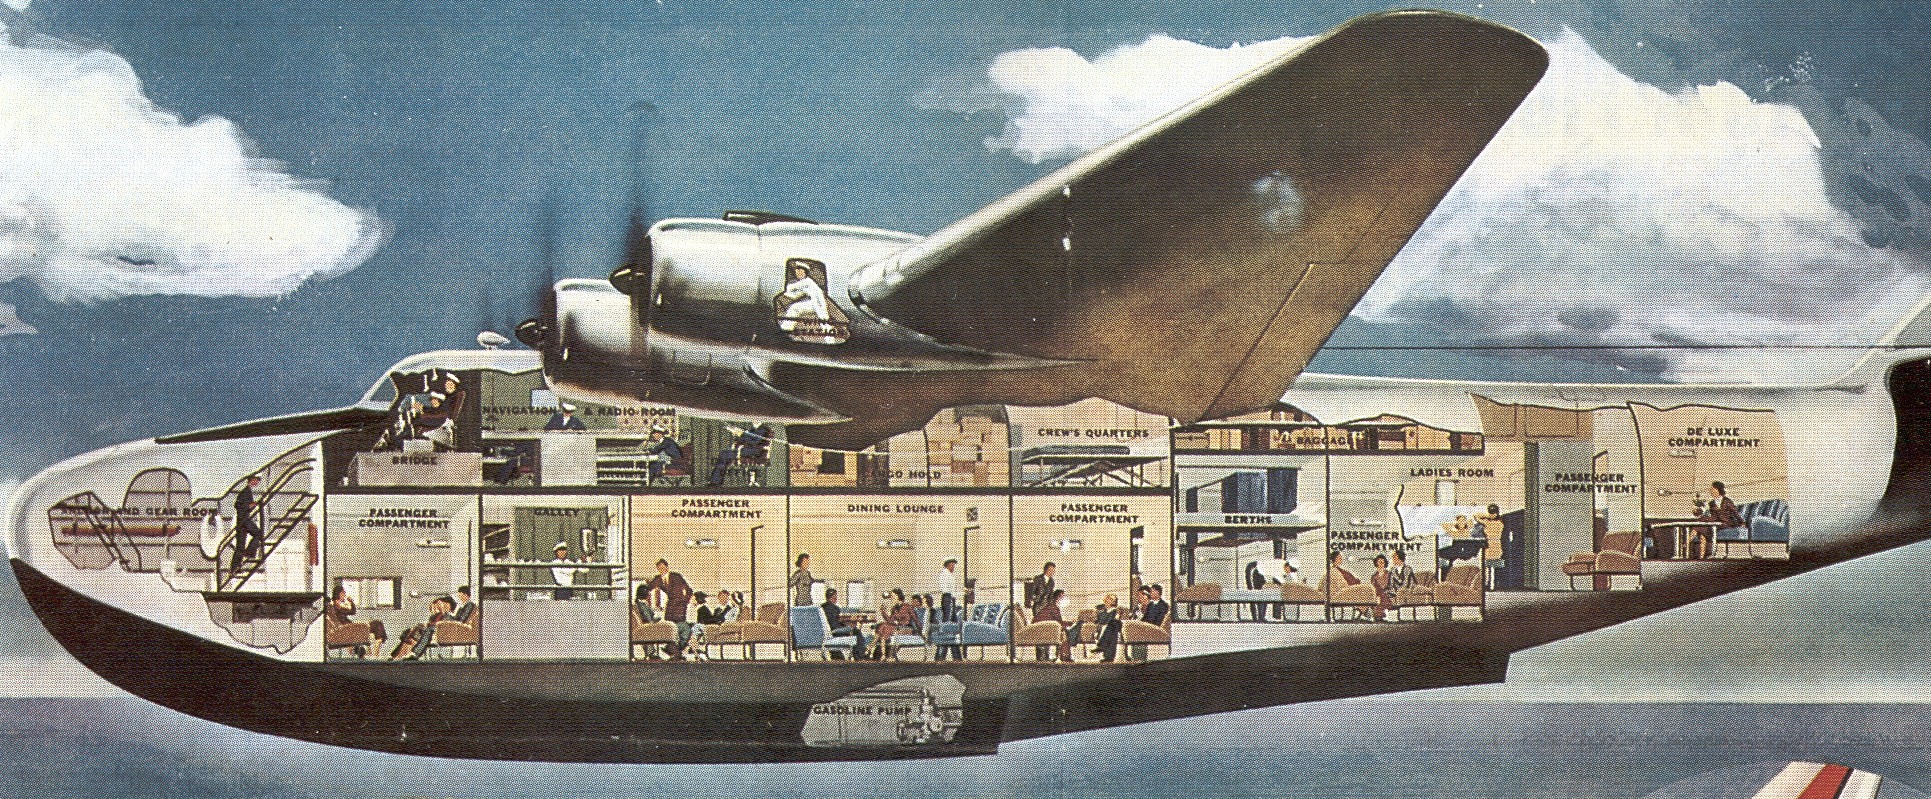 Boeing 314 Clipper #21